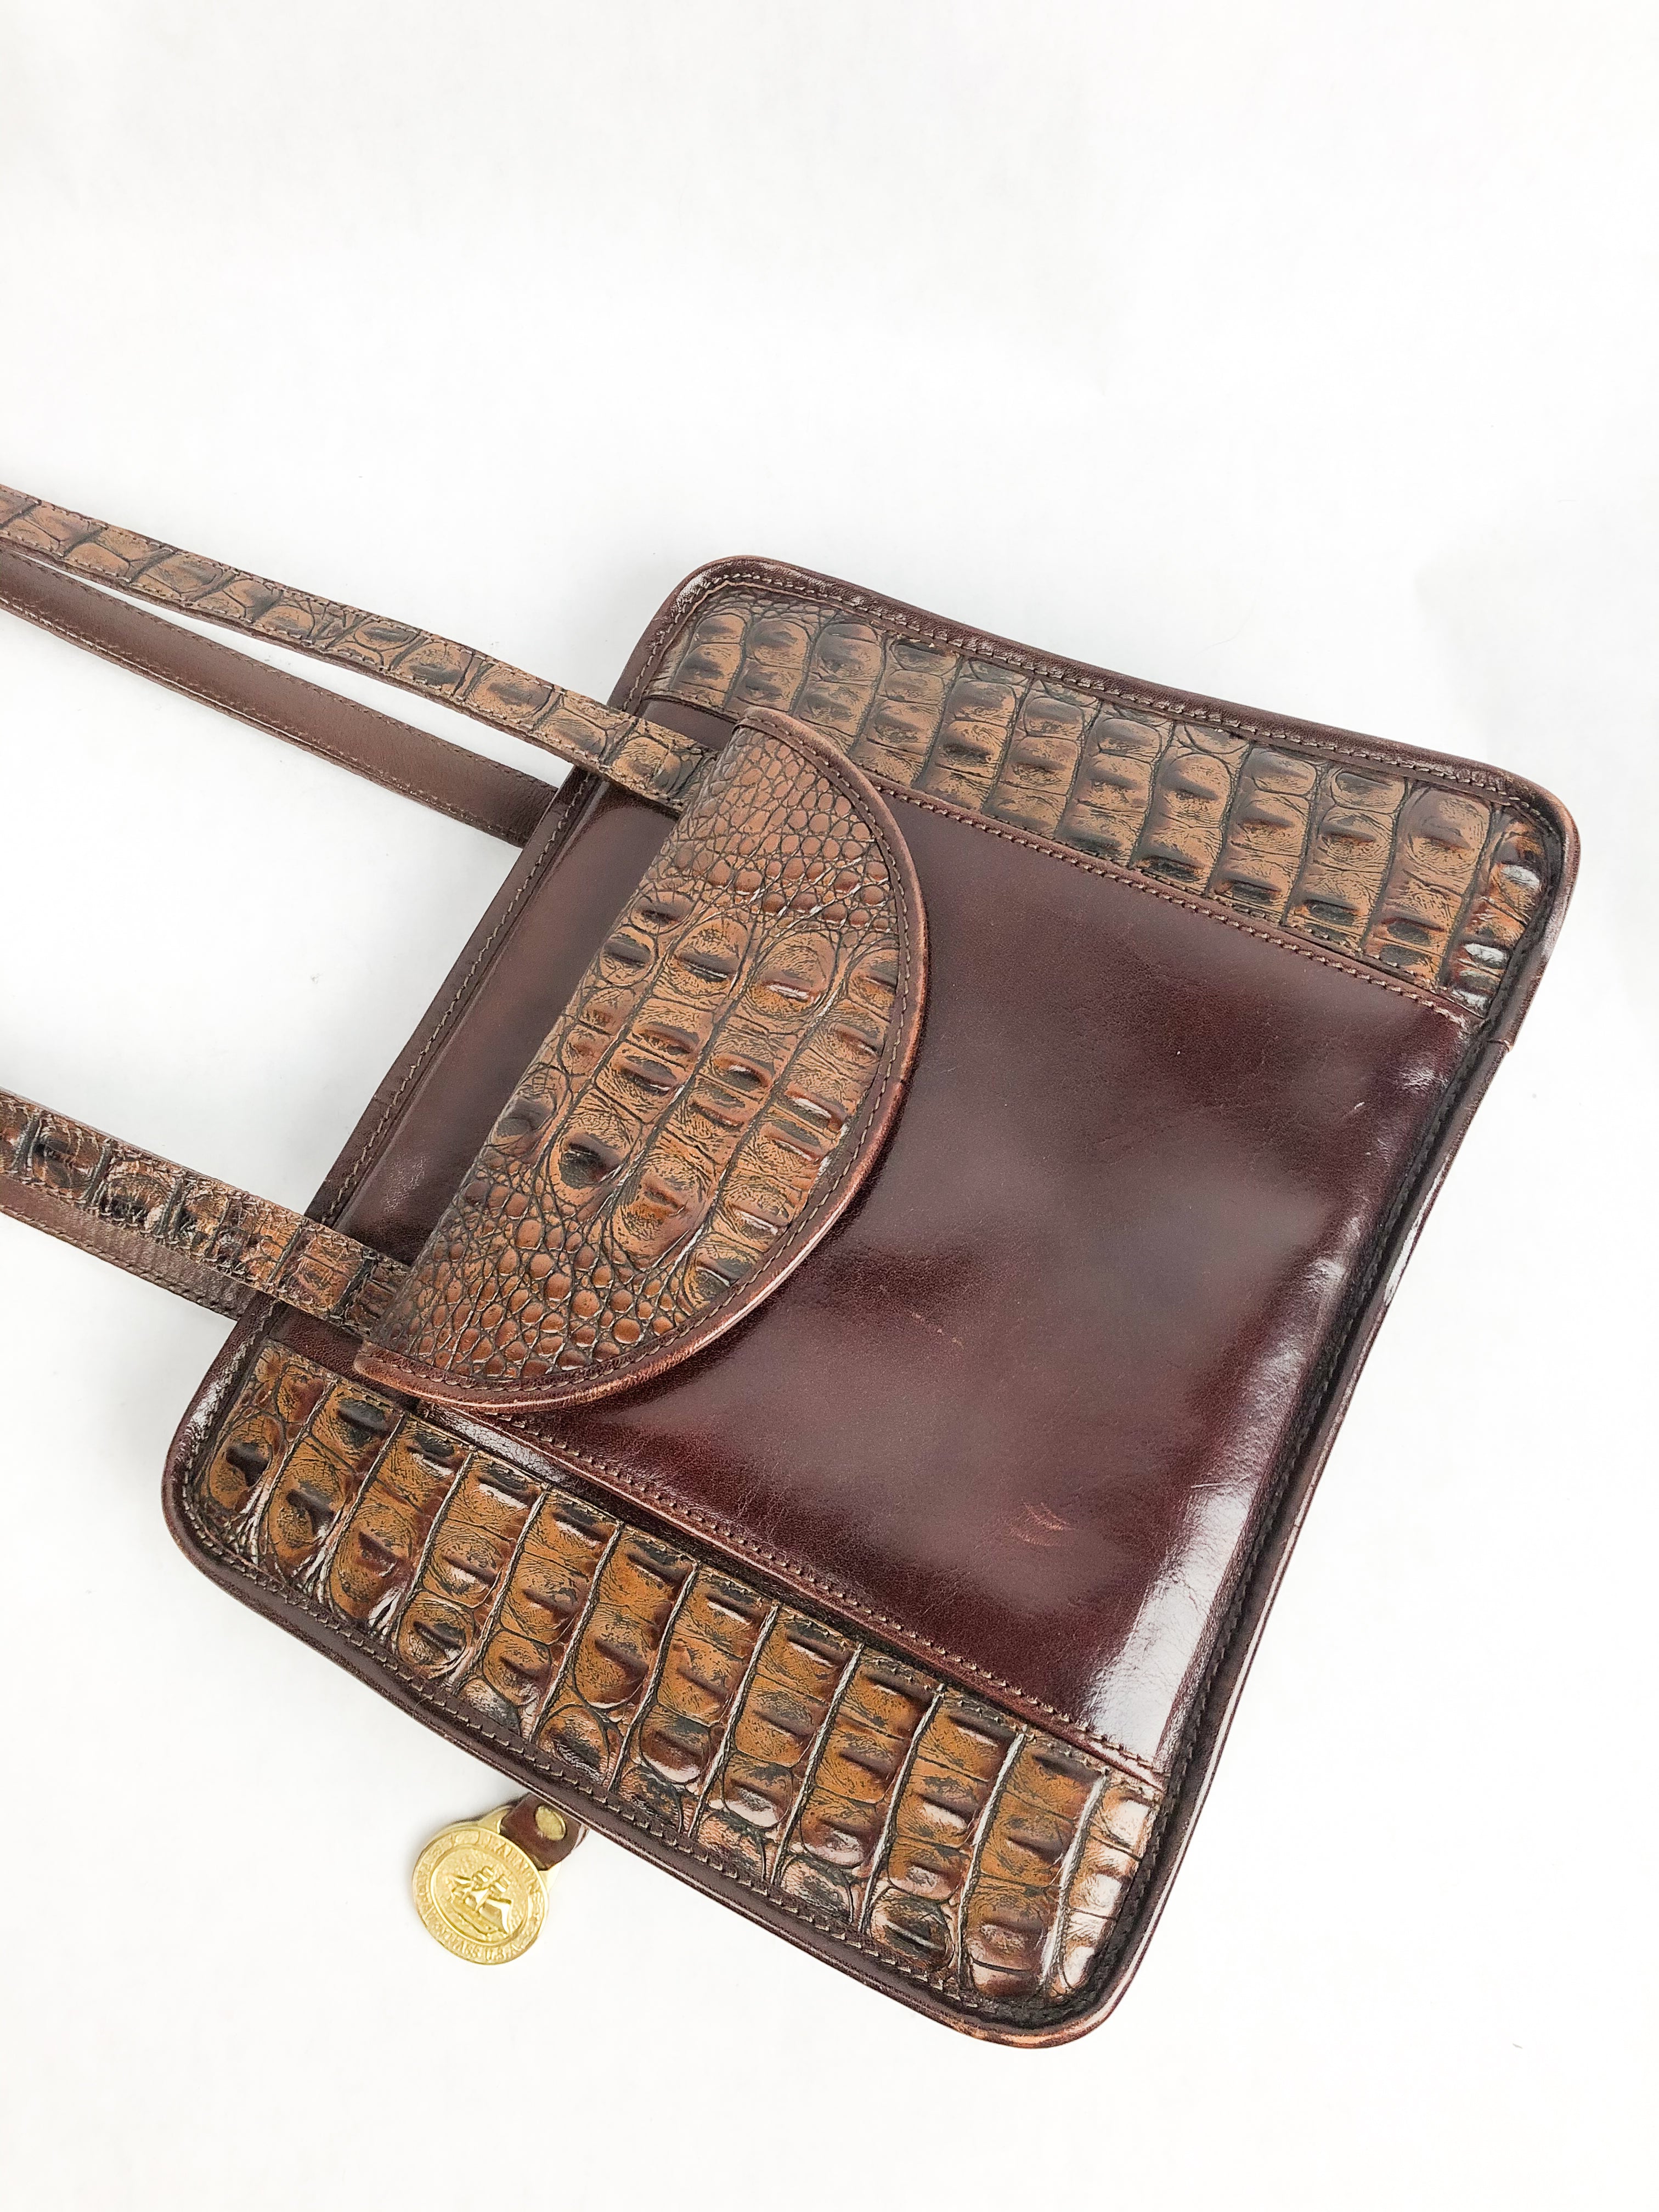 Brahmin Everlee Croc Embossed Leather Crossbody Bag - ShopStyle